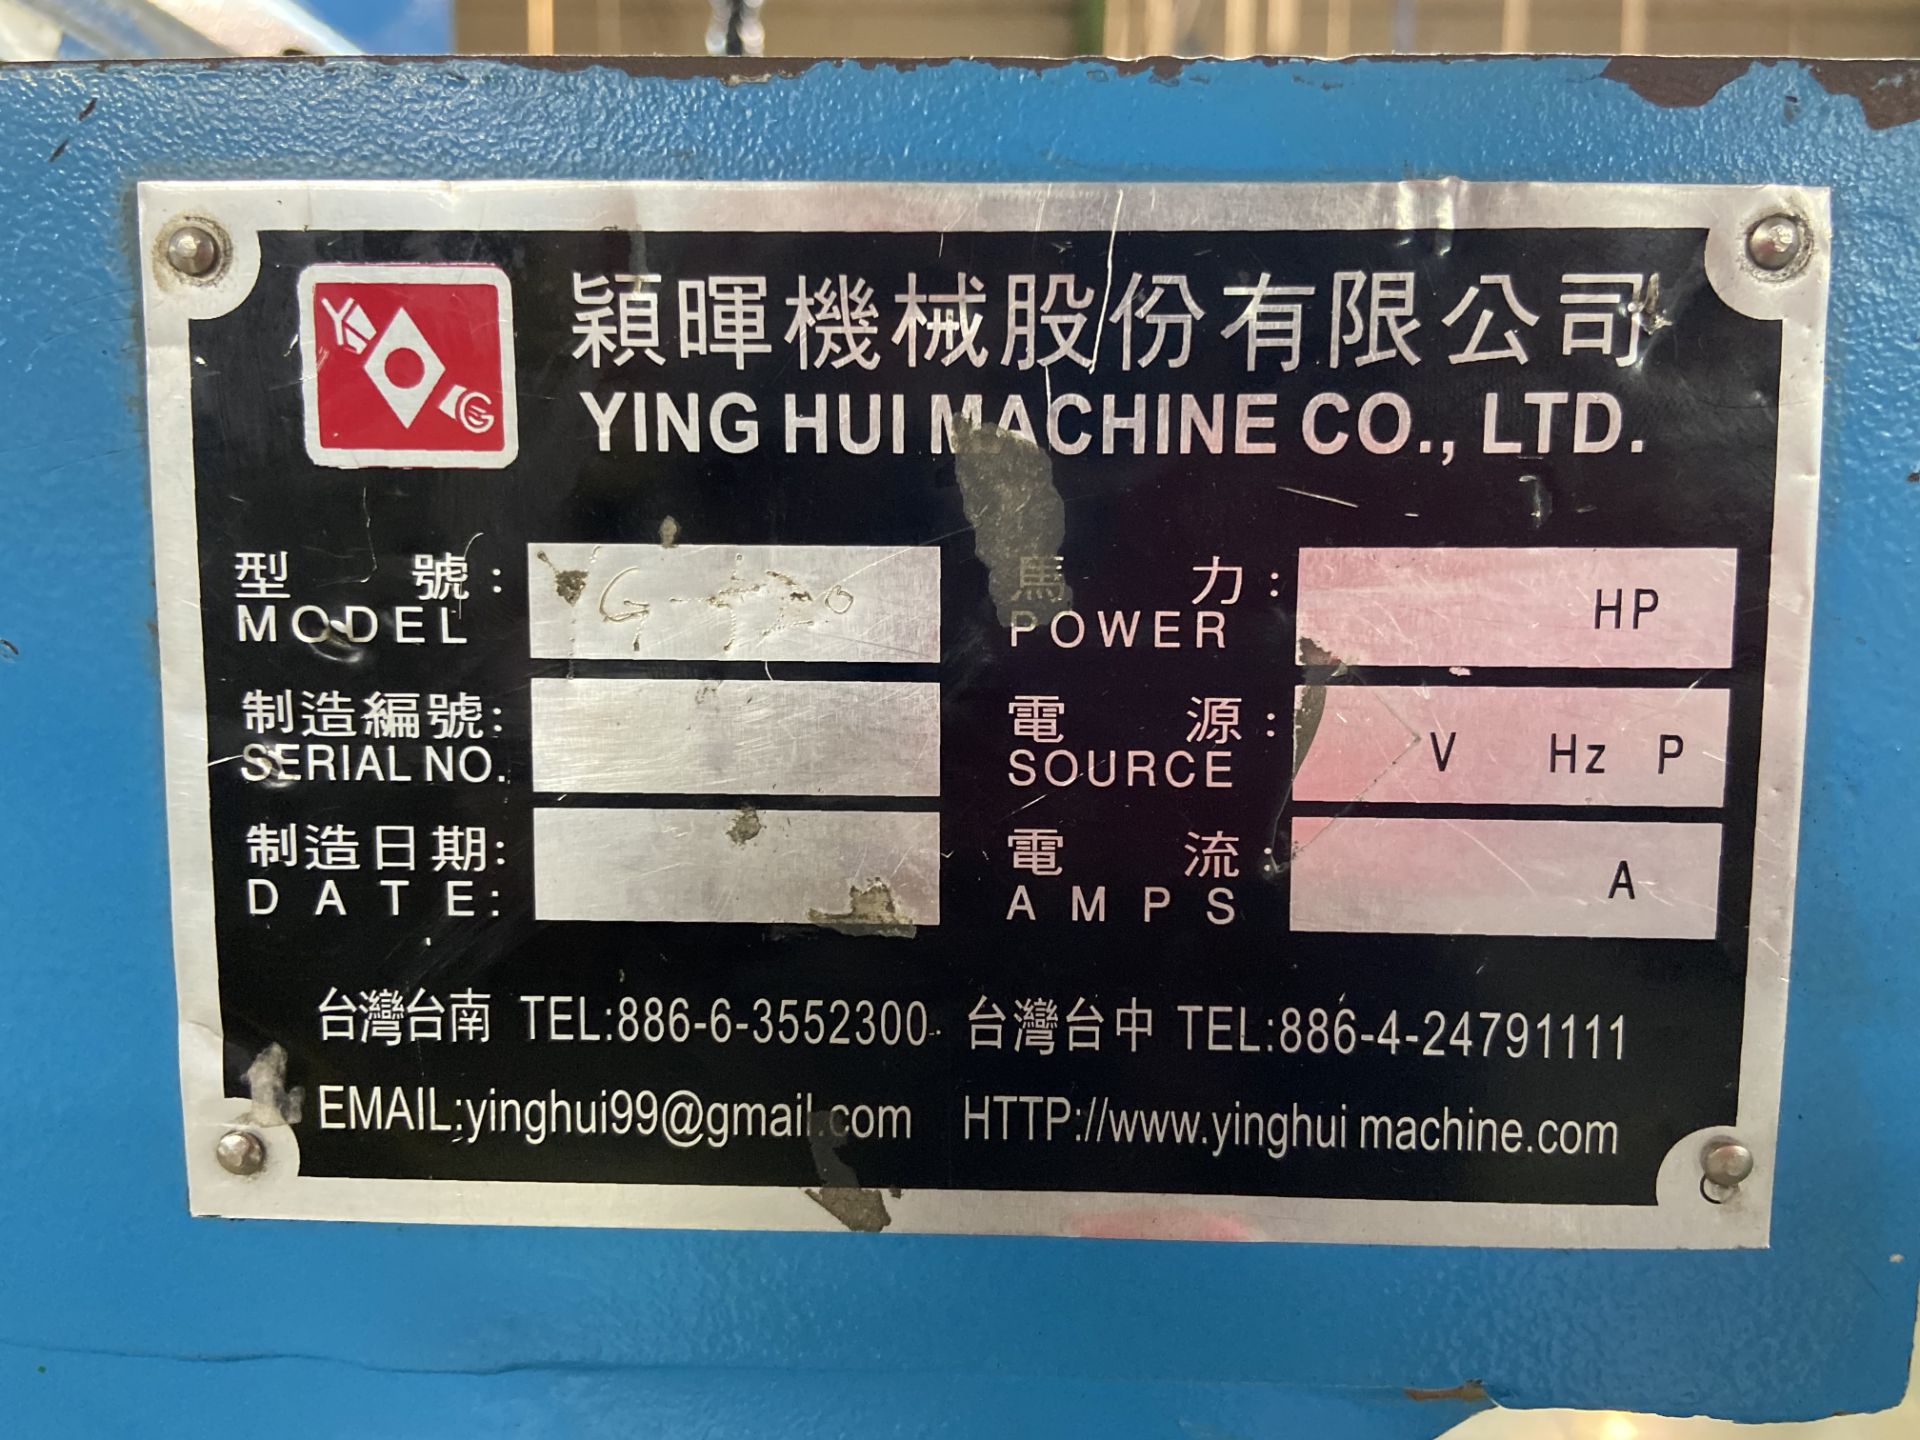 (2) Prensas de corte hidráulica de brazo oscilante, marca Ying Hui Machine, Modelo: YG-520 - Image 23 of 24